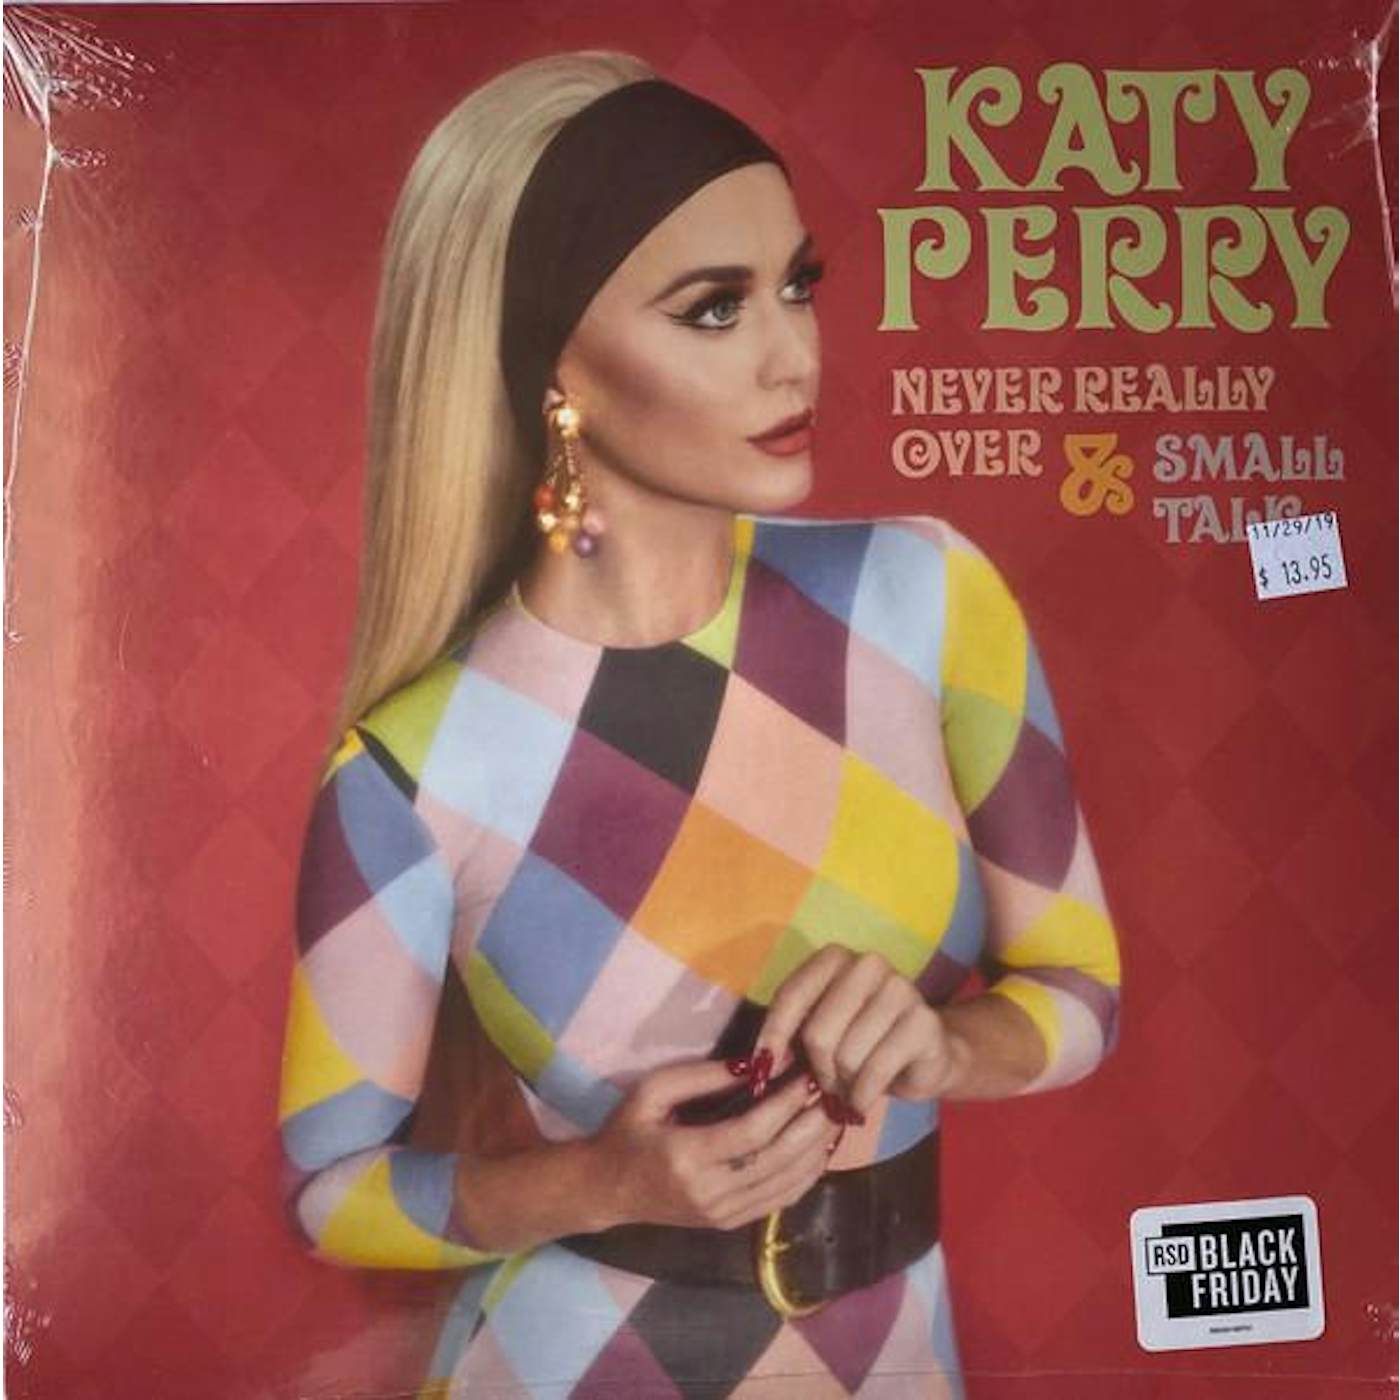 Katy Perry NEVER REALLY OVER / SMALL TALK Vinyl Record